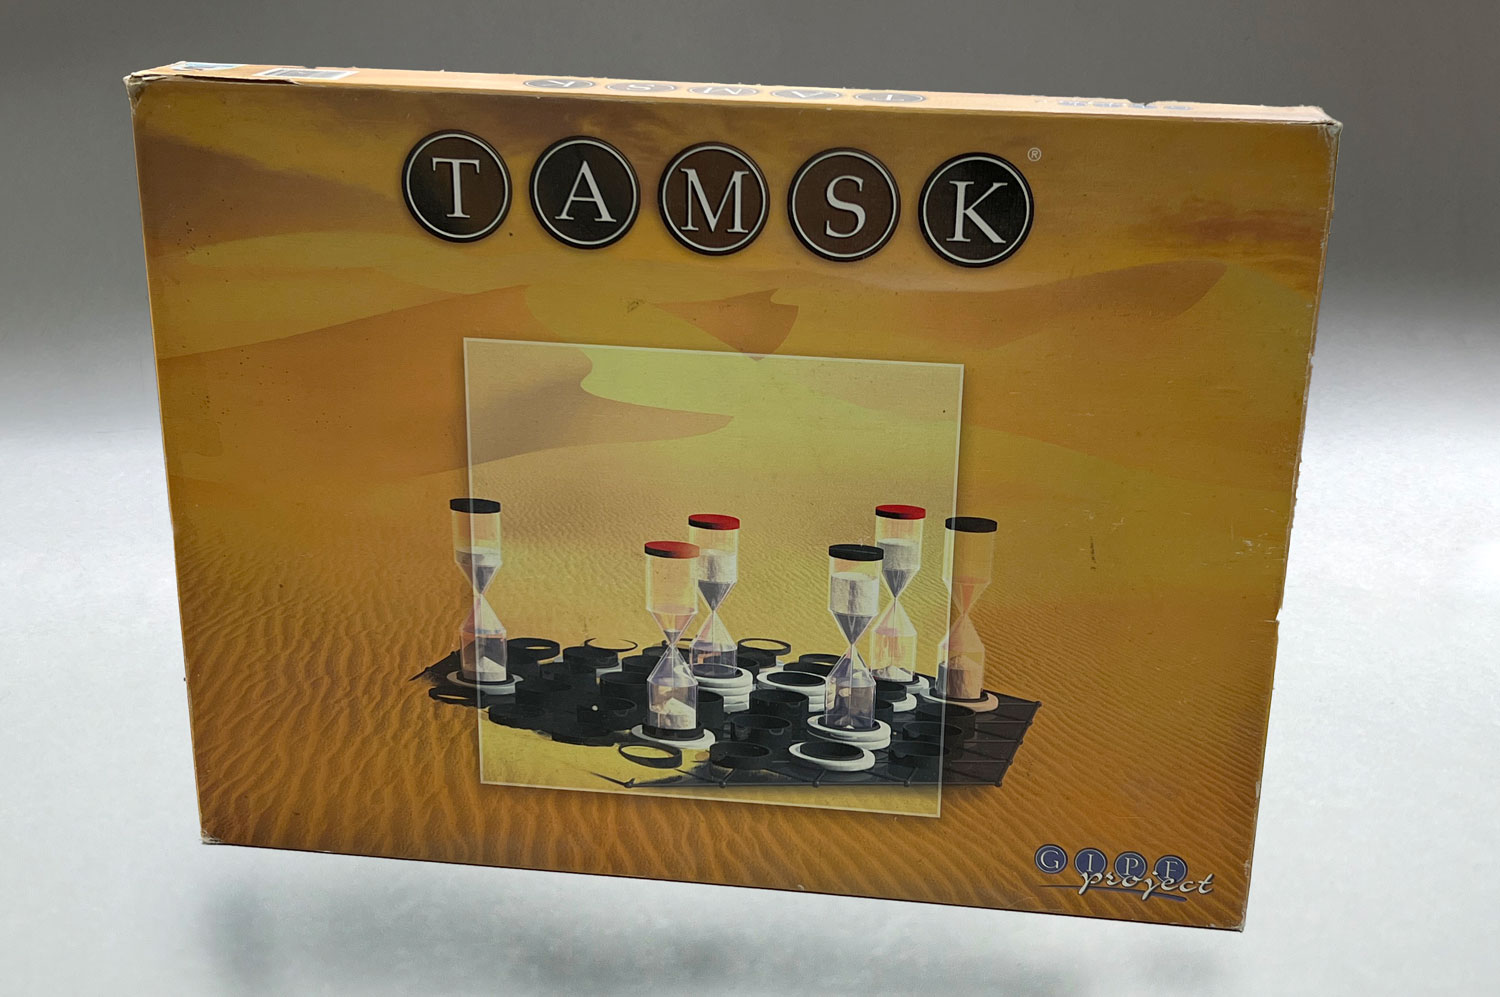 TAMSK: The box